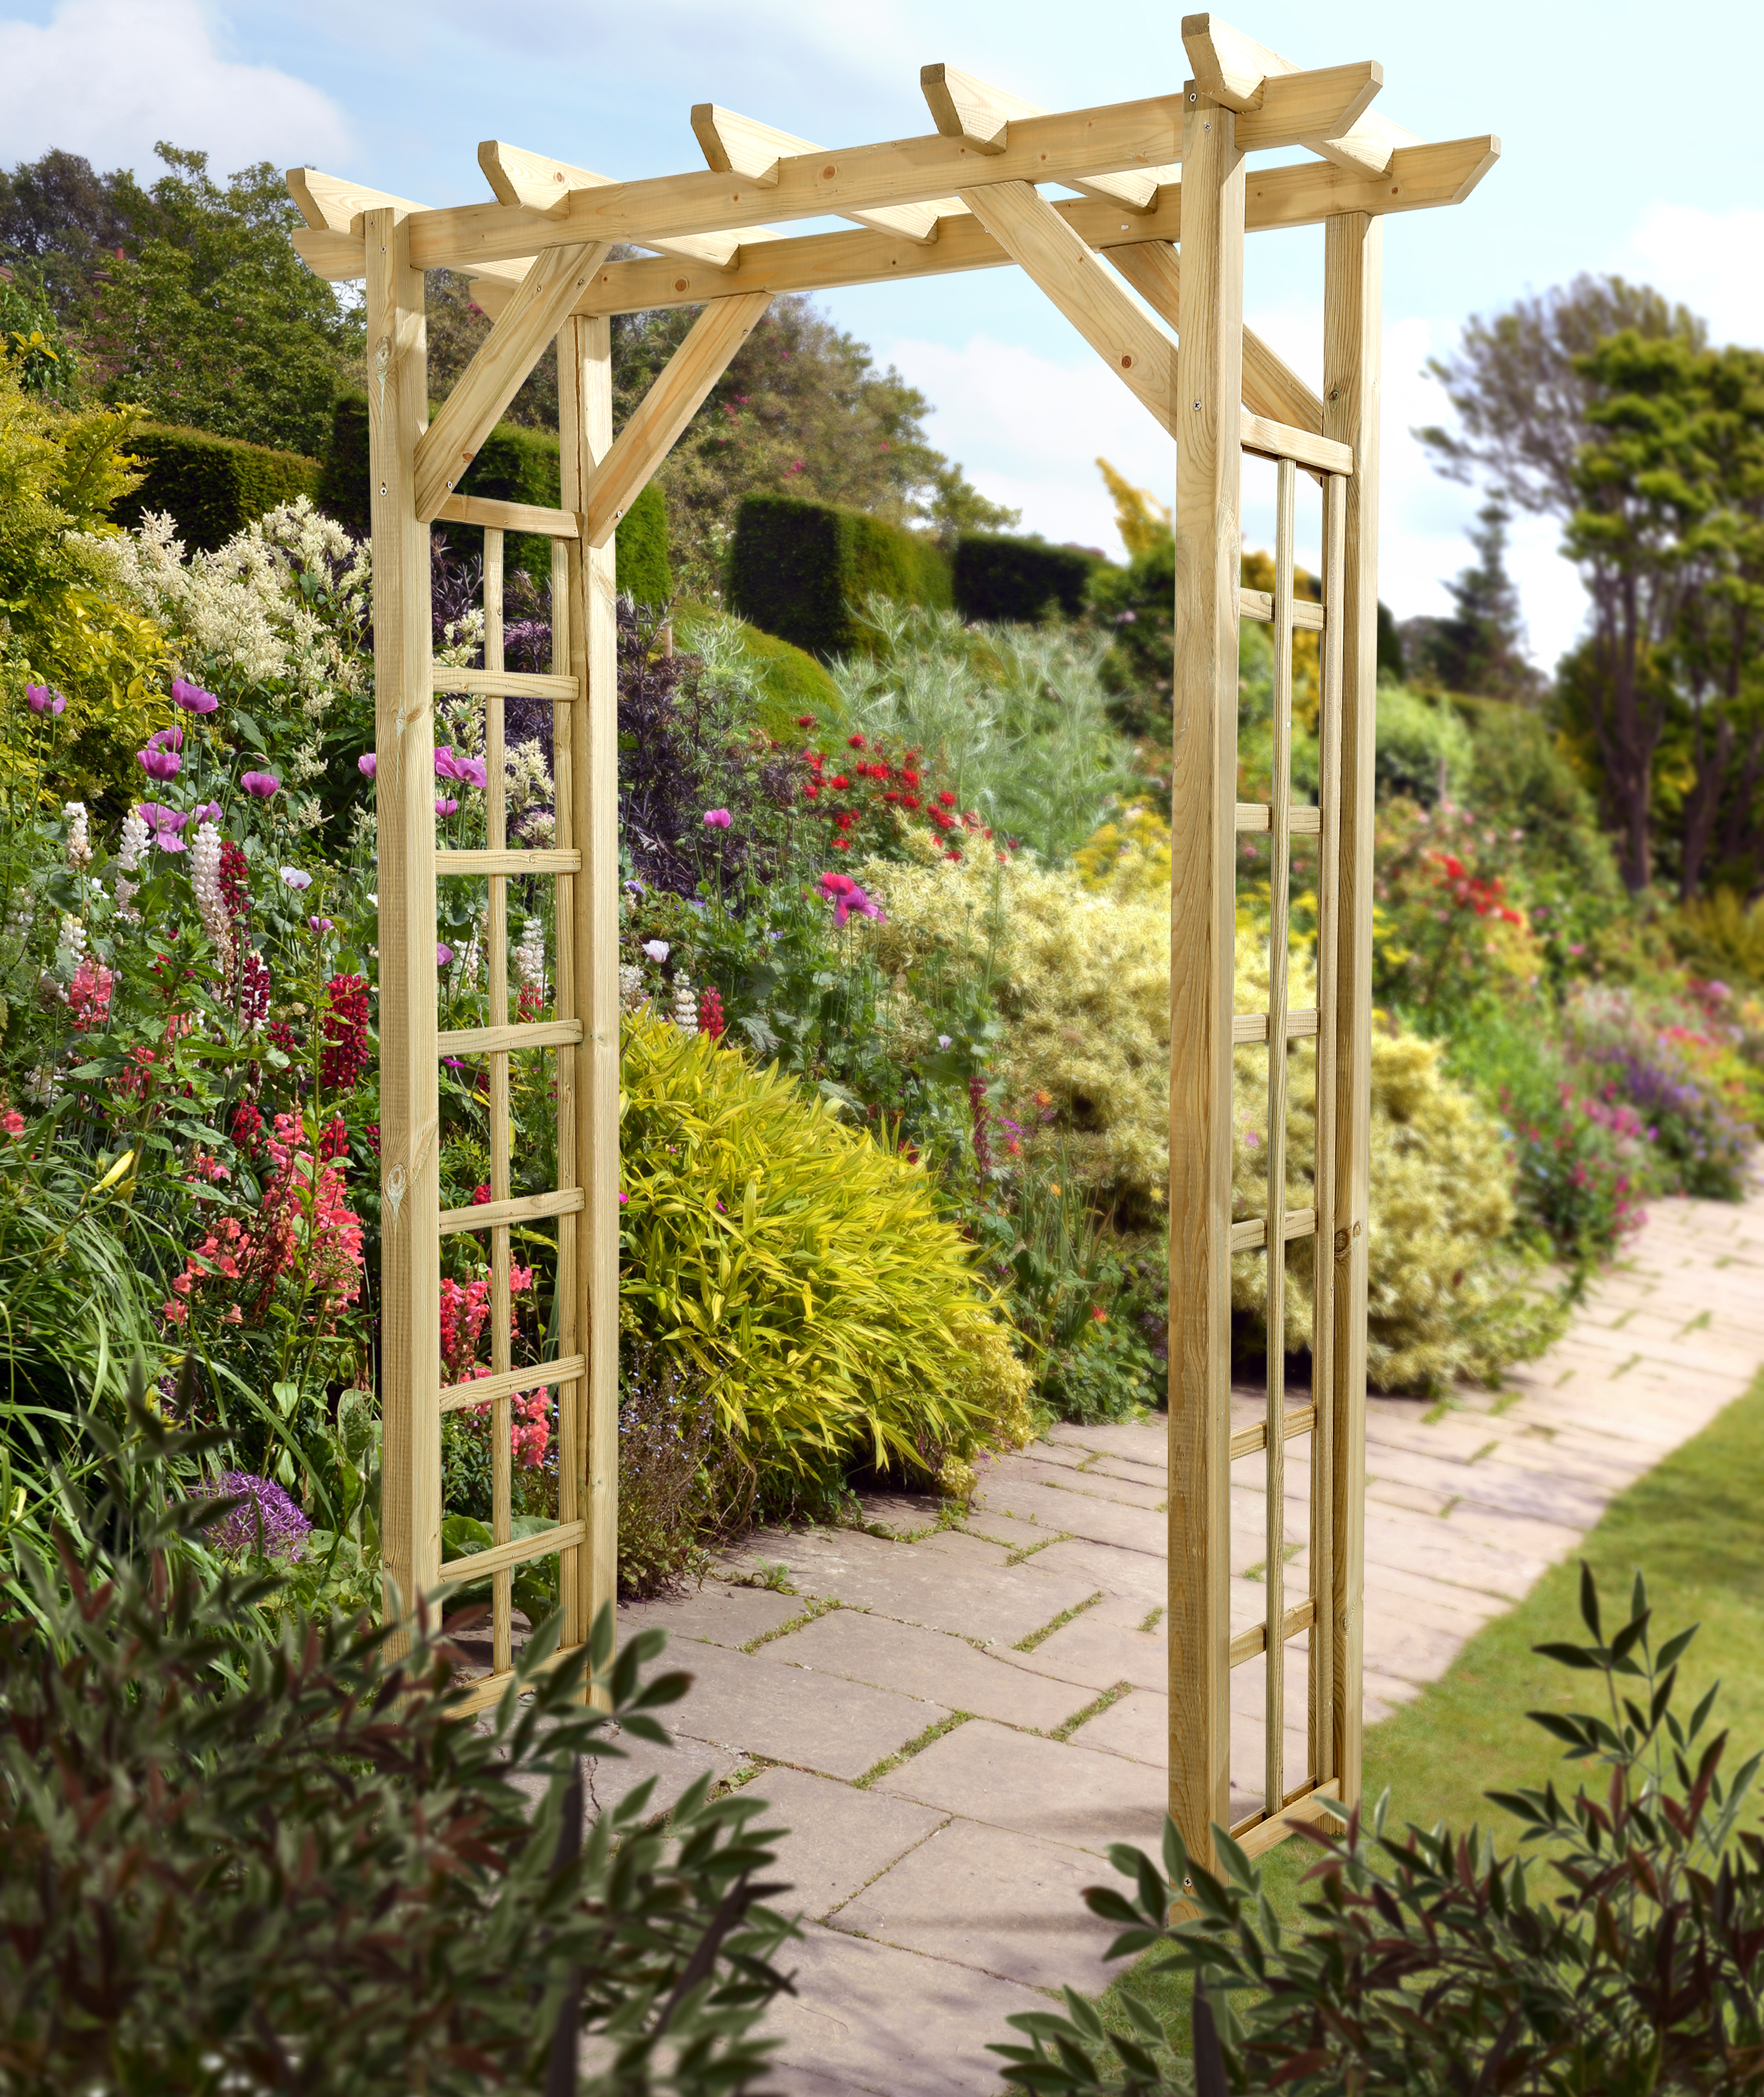 Wickes Decorative Garden Arch - 1400 x 600mm